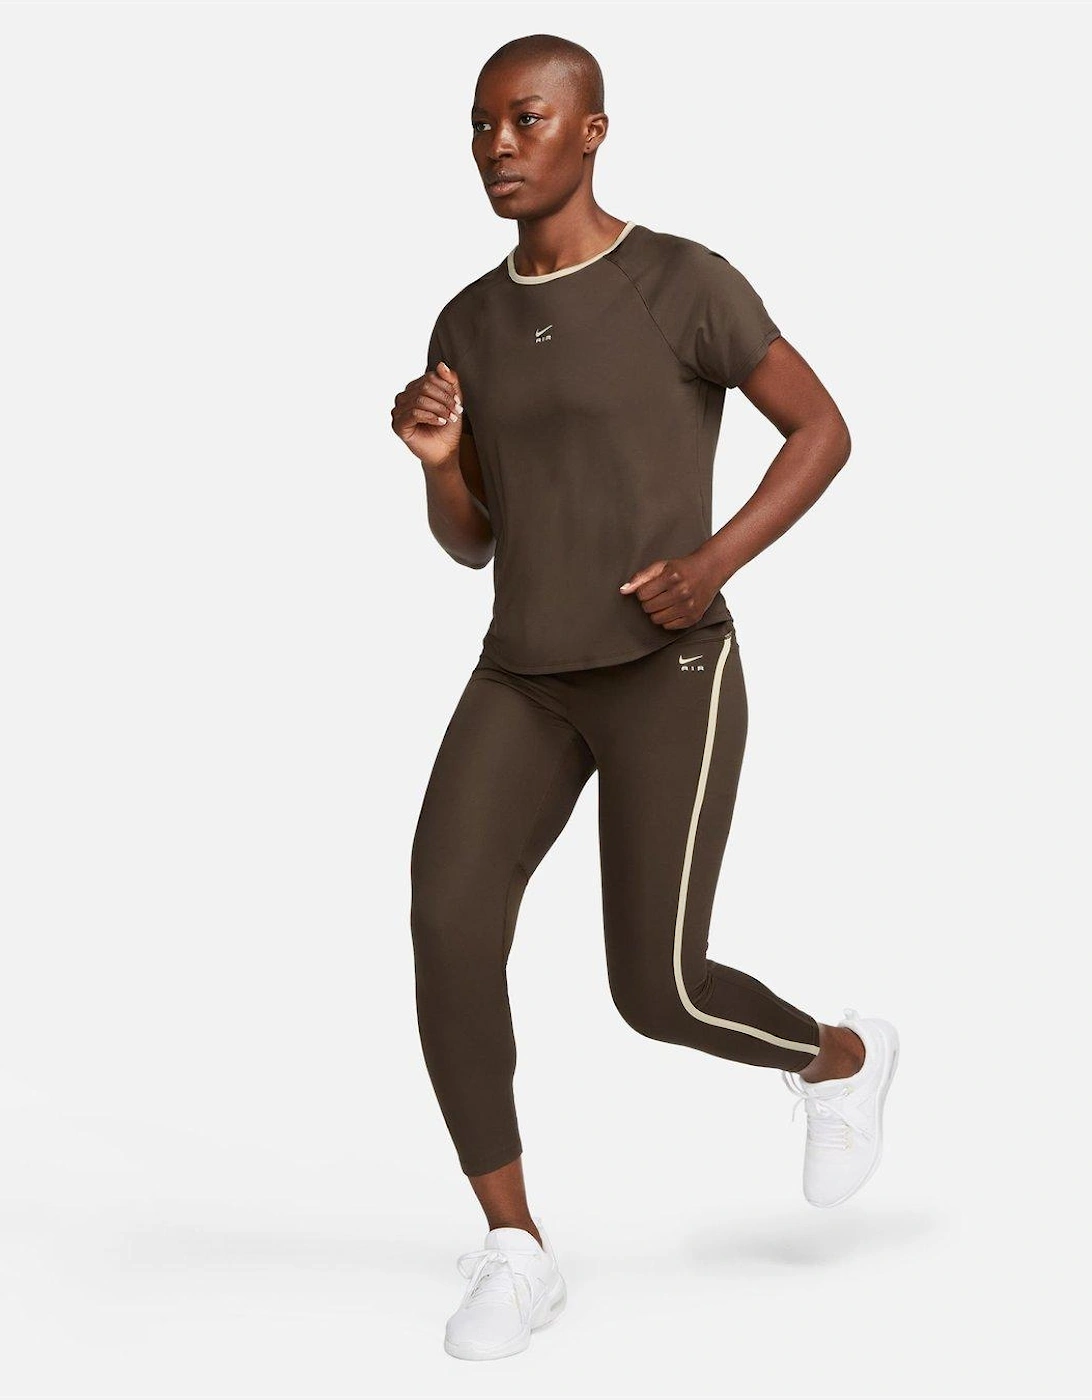 Womens Short-Sleeve Running Top - Brown